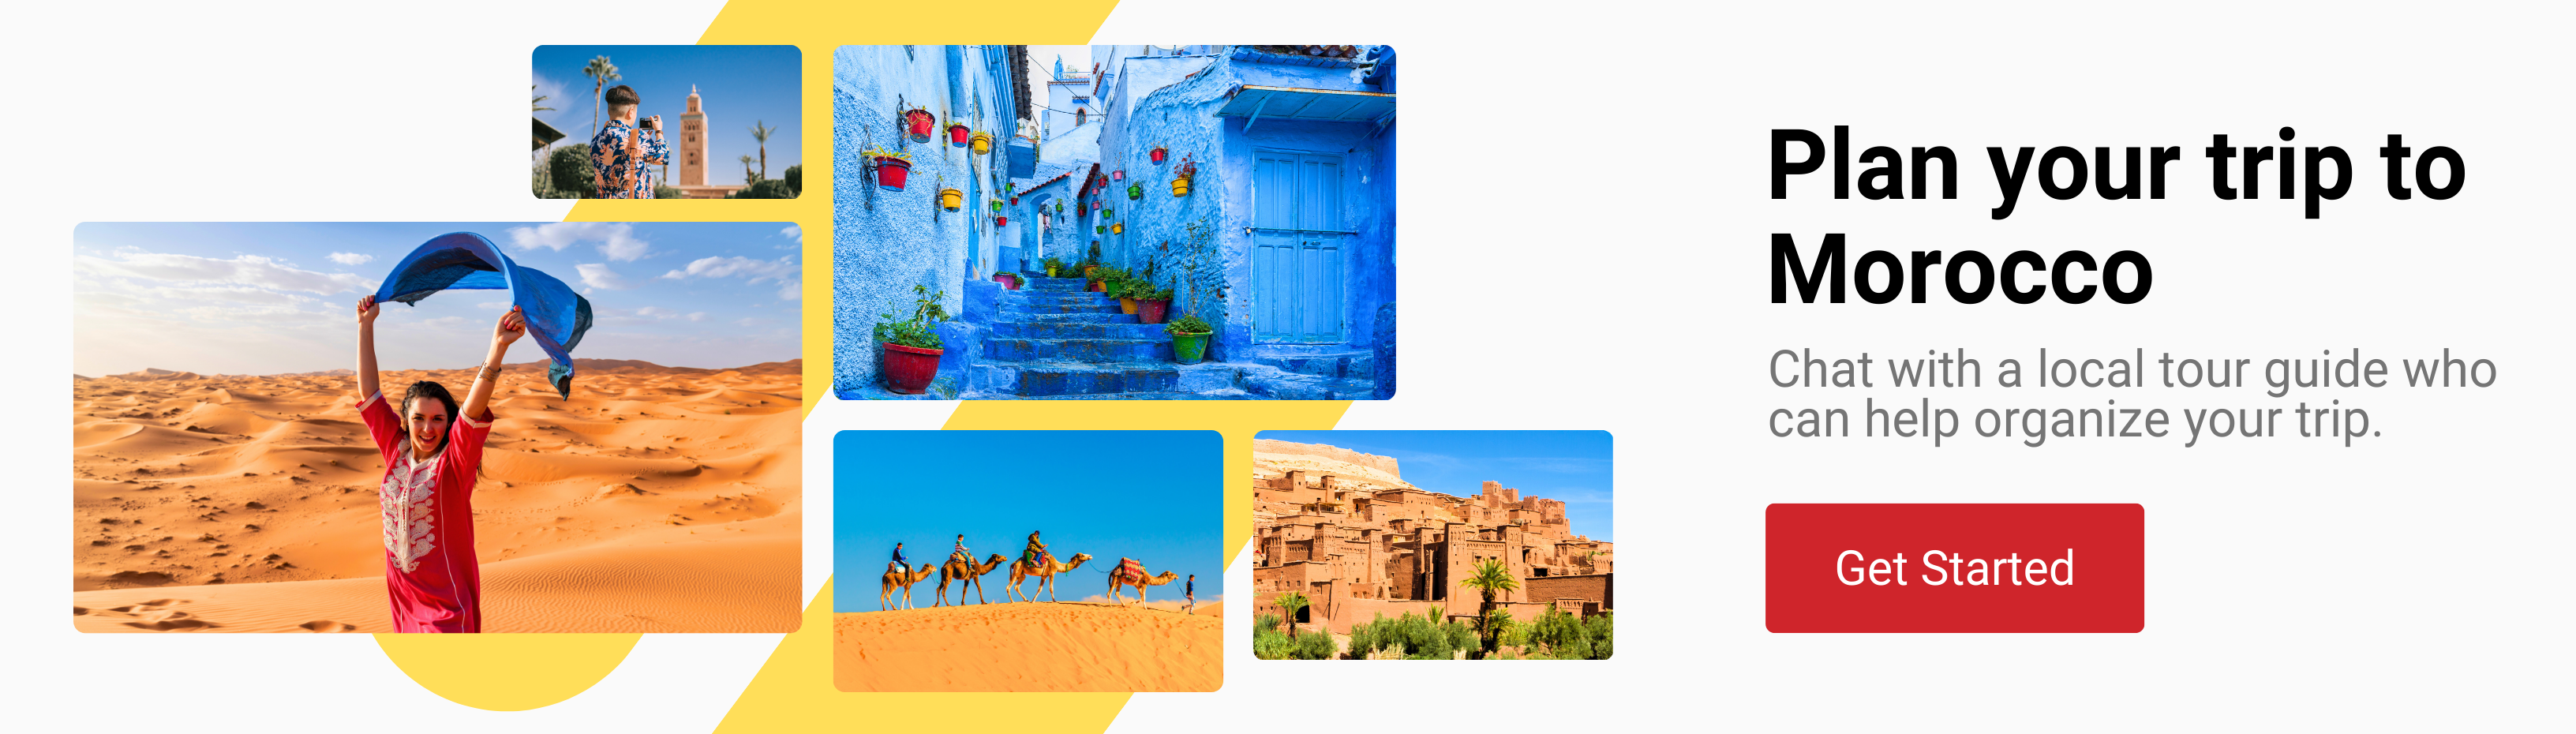 Morocco Tour Guide 